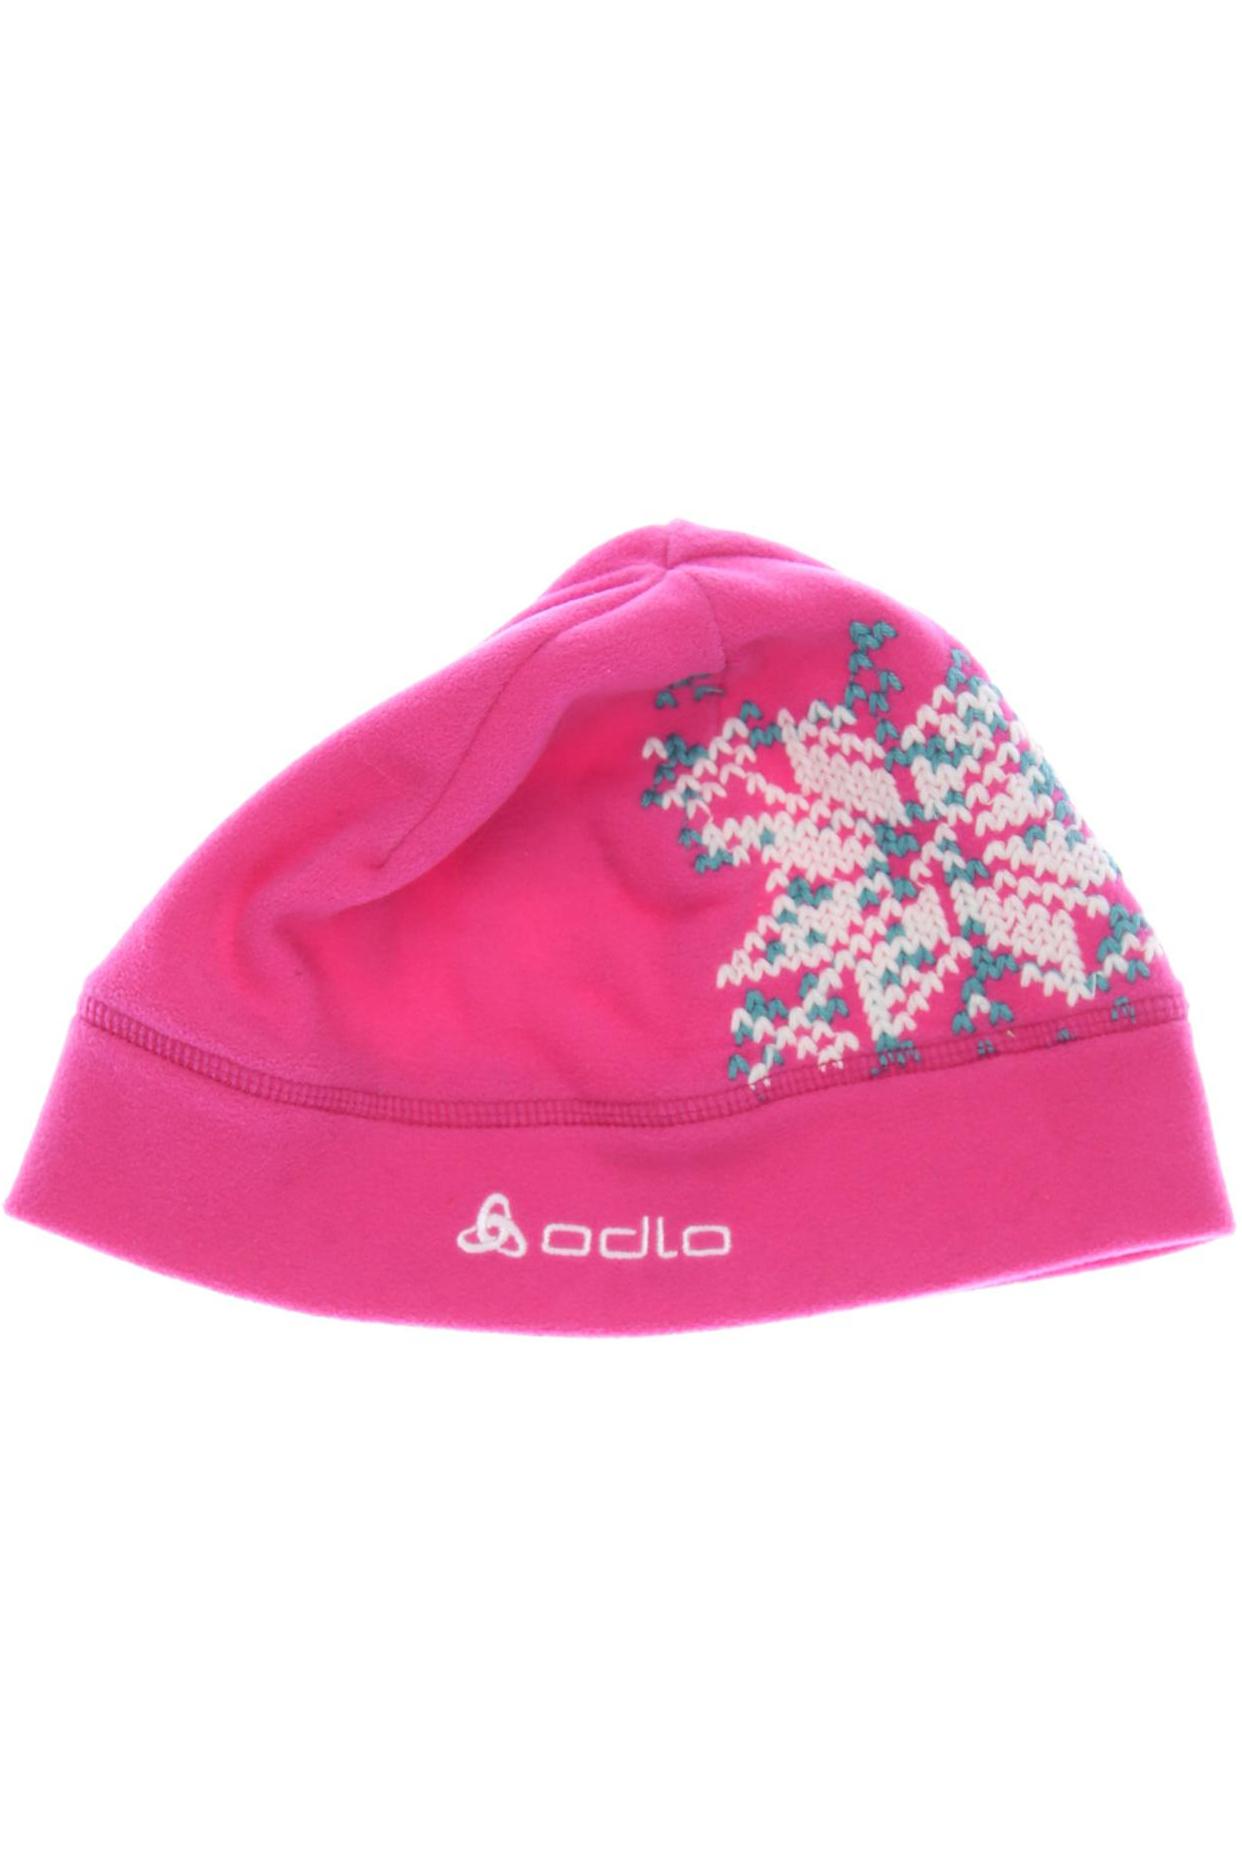 Odlo Damen Hut/Mütze, pink von Odlo